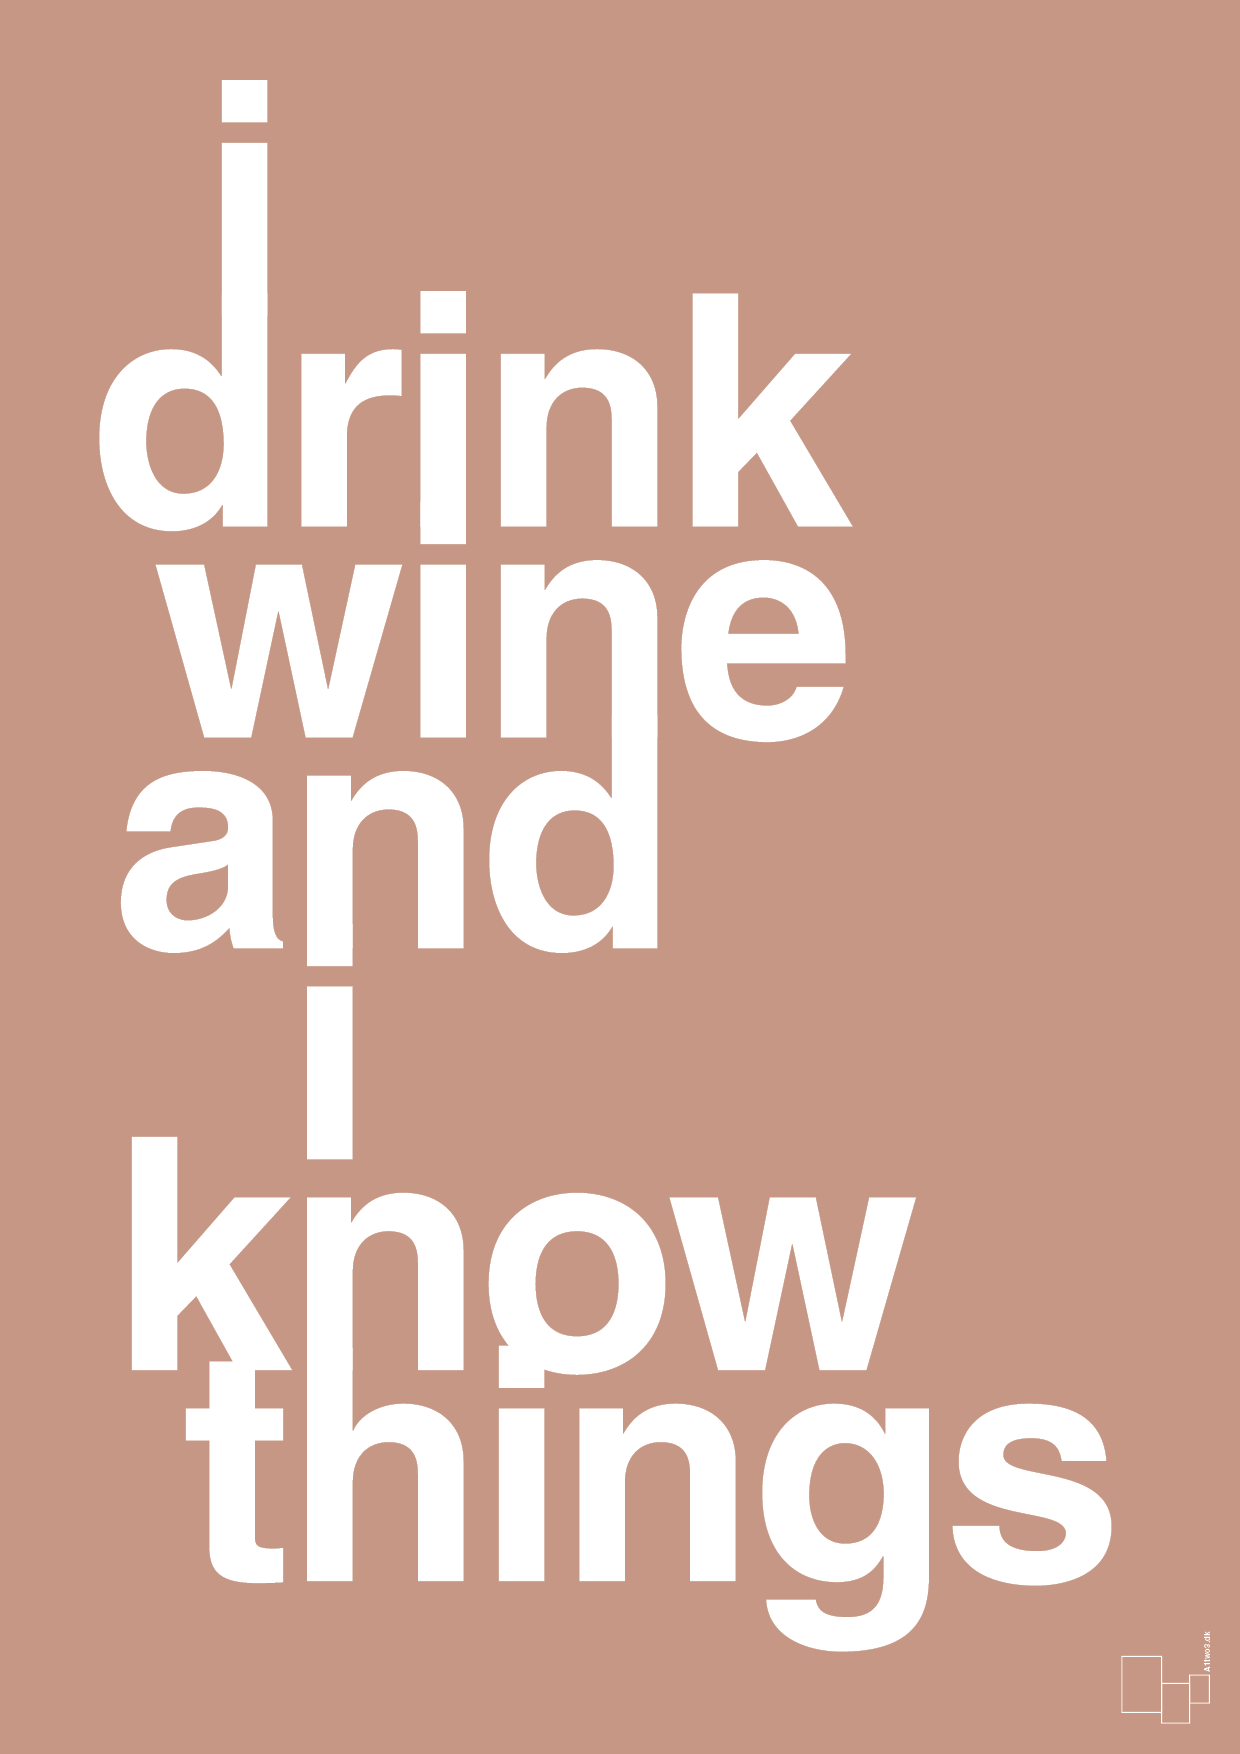 i drink wine and i know things - Plakat med Ordsprog i Powder